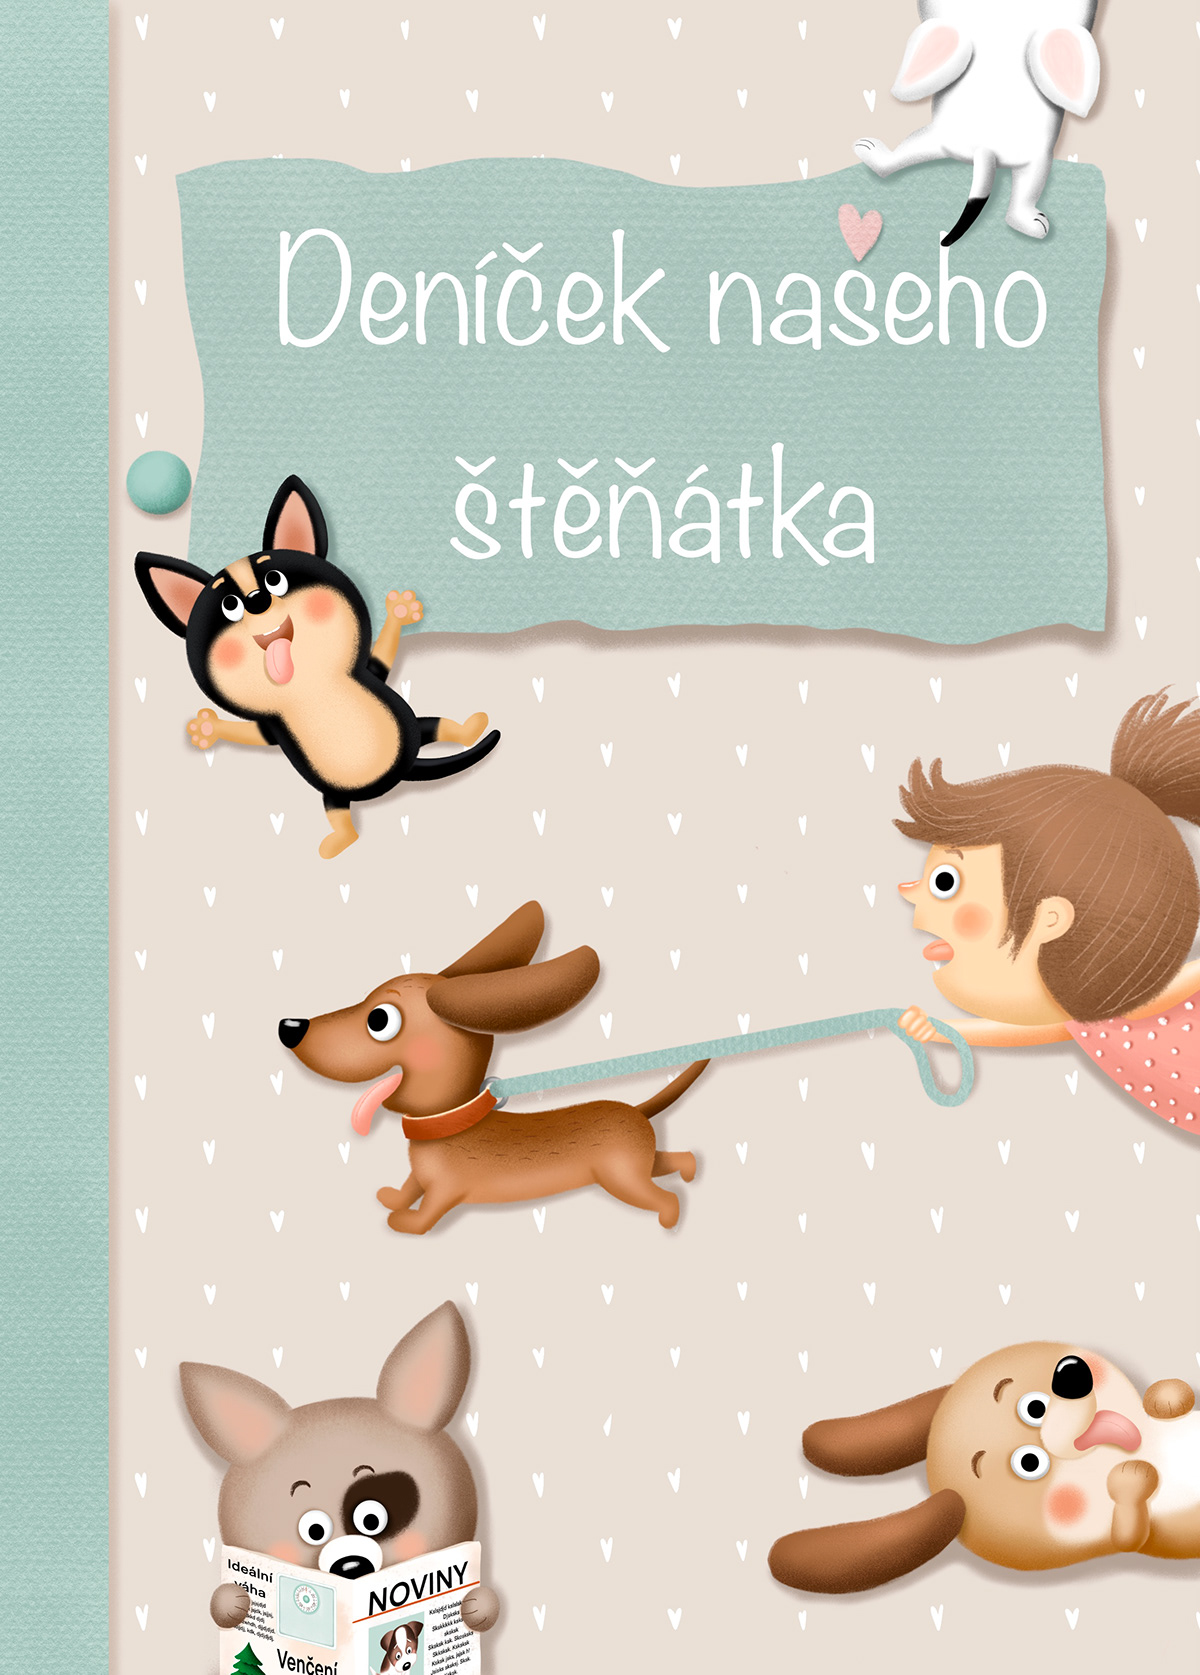 animals Cat Character children's book children's illustration cute cute illustration dog puppy